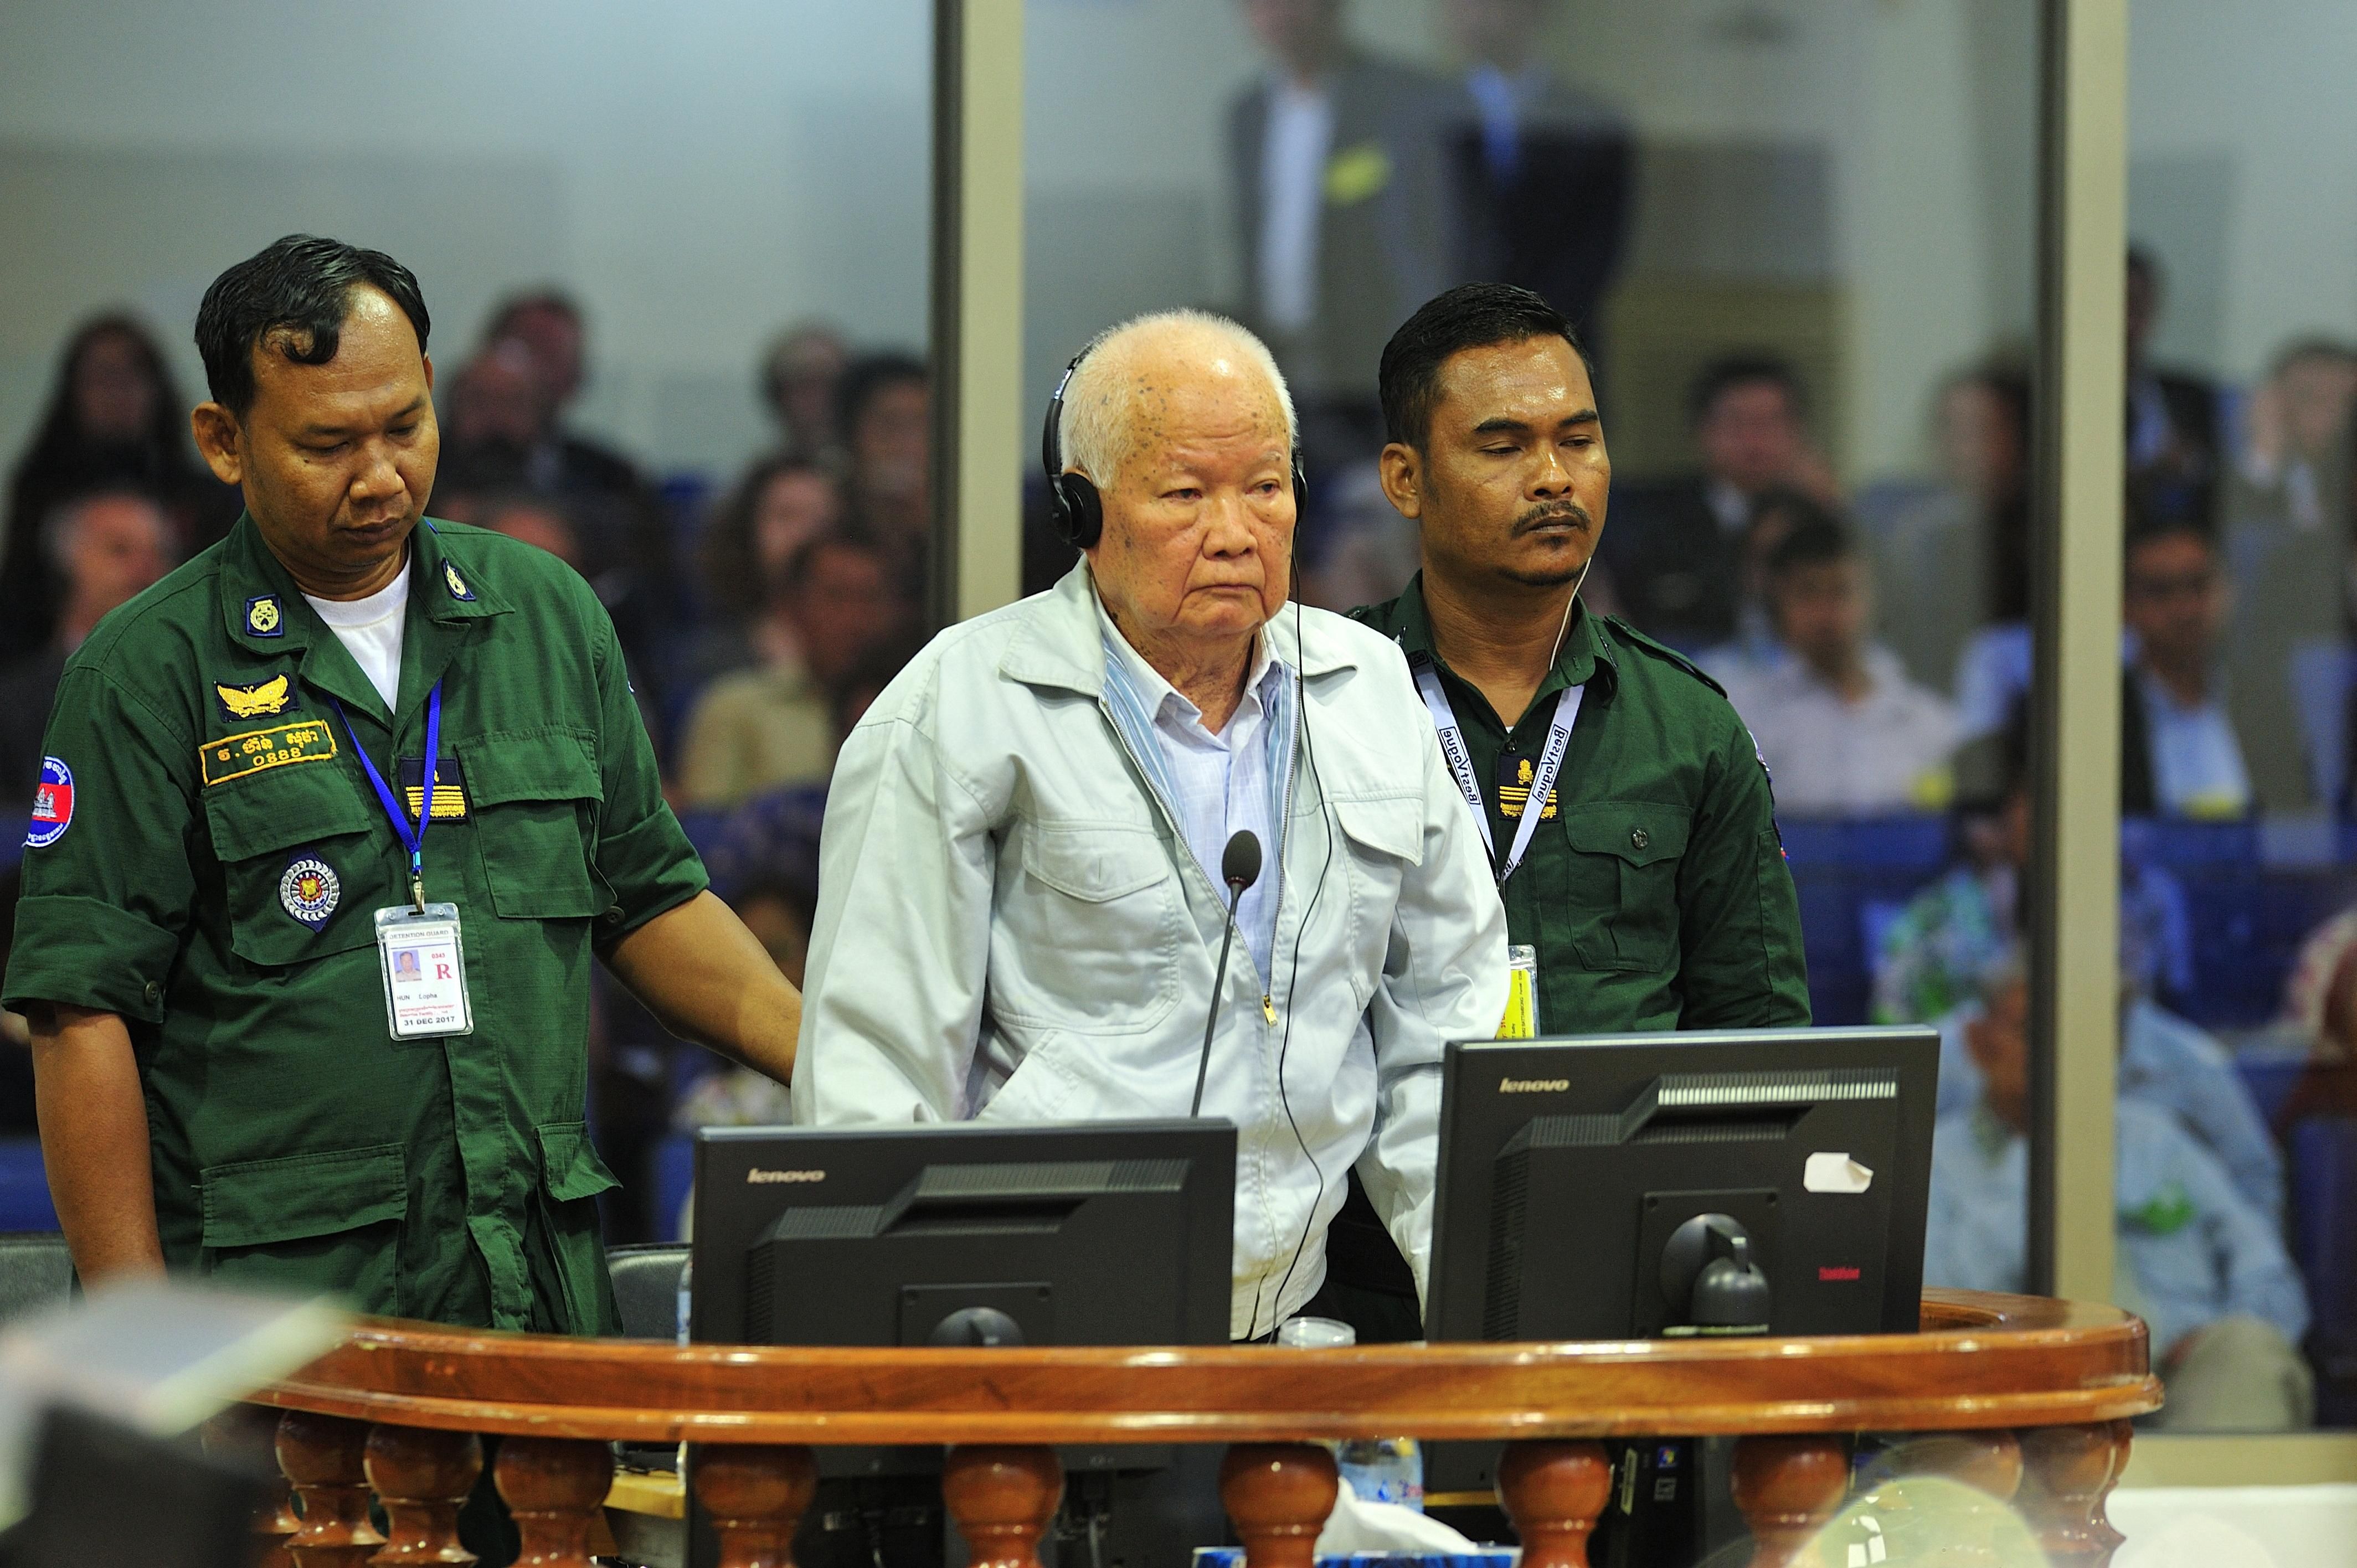 Hard Numbers: Khmer Rouge convictions, soaring Sri Lankan inflation, Japan’s Yen-tervention, “Fat Leonard” nabbed